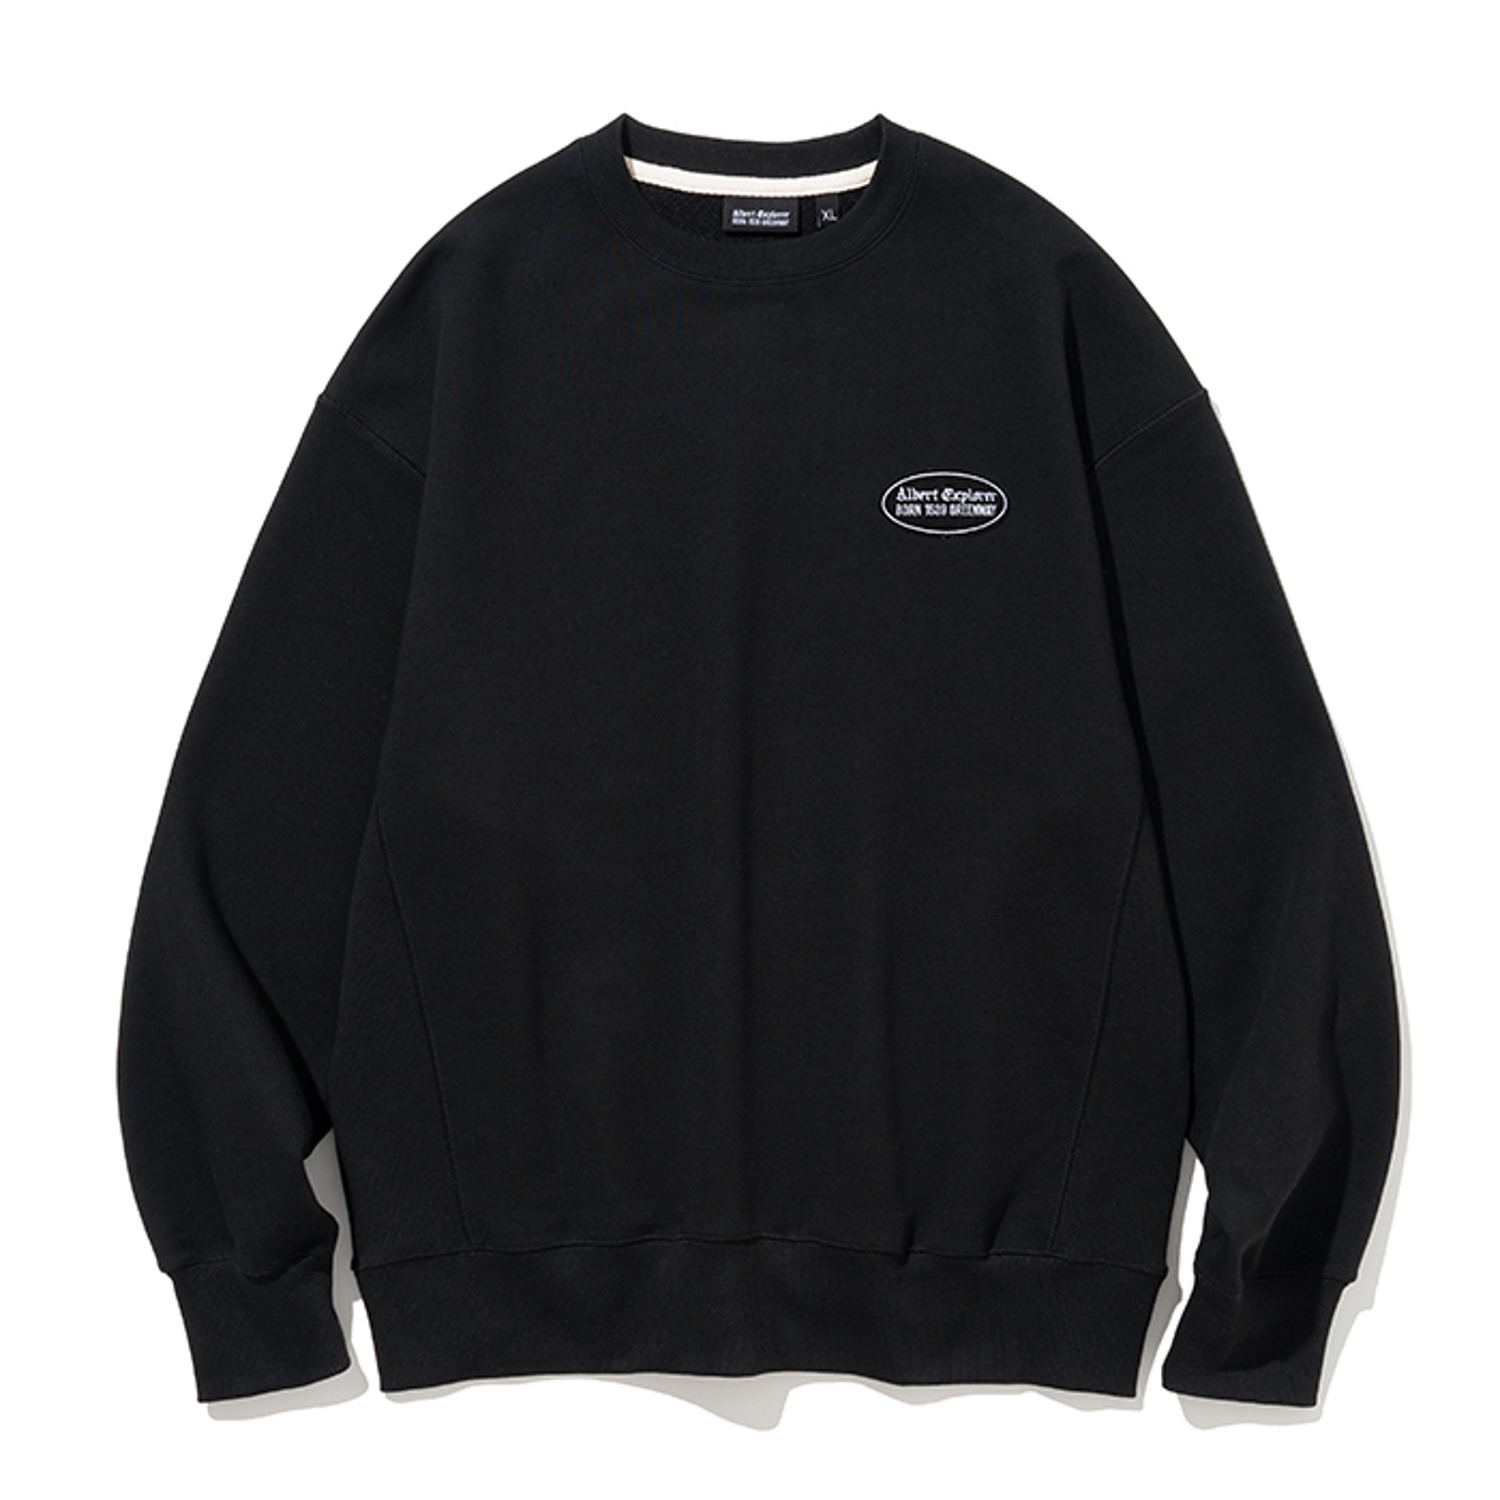 ae patch sweatshirts black